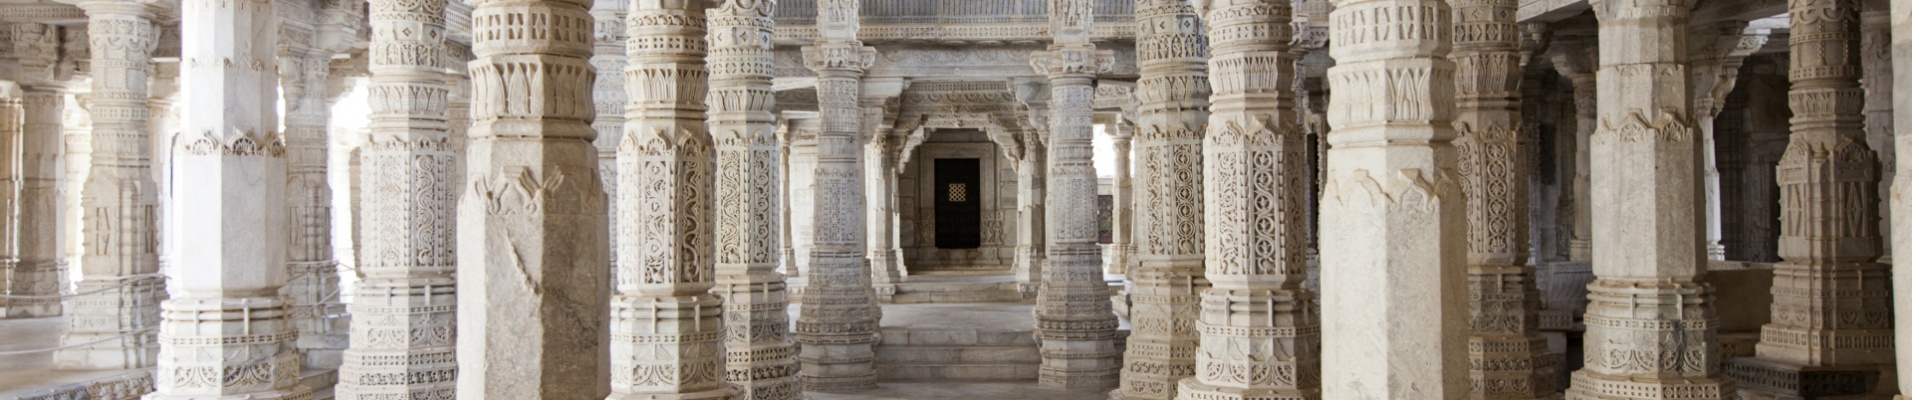 jain-temple-ranakpur-motifs